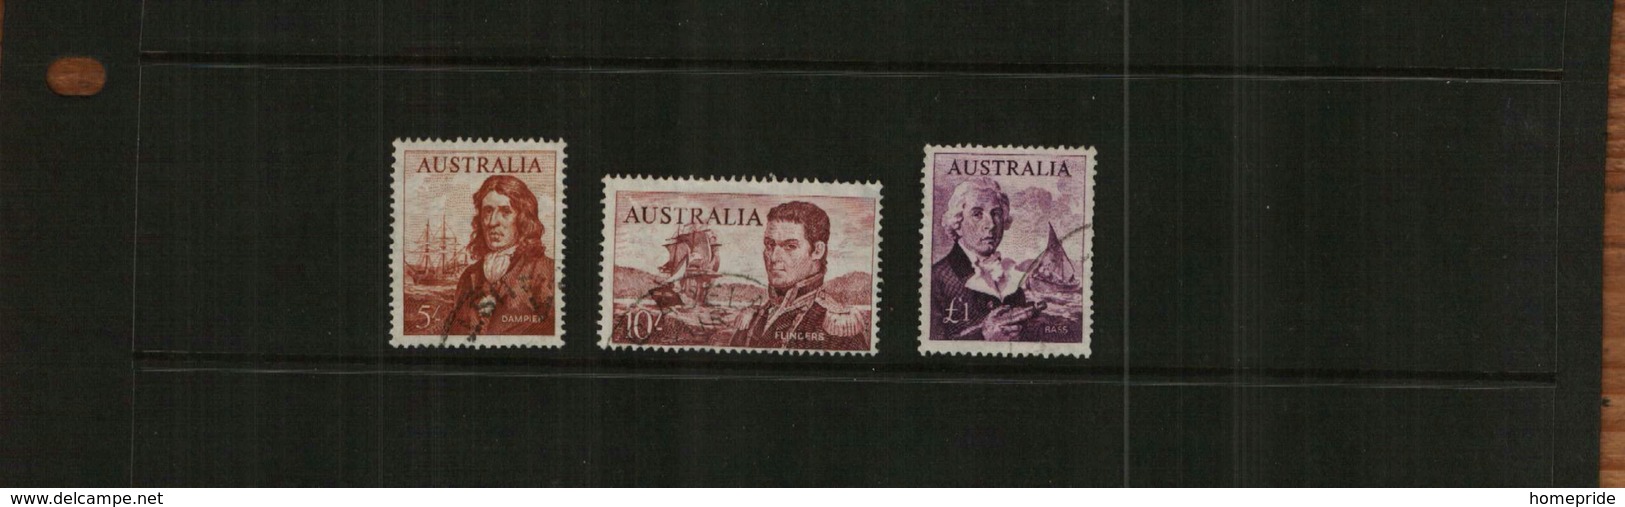 AUSTRALIA  - QE11 - 1963 - HIGH VALUES - 3 Stamps - USED - Usati